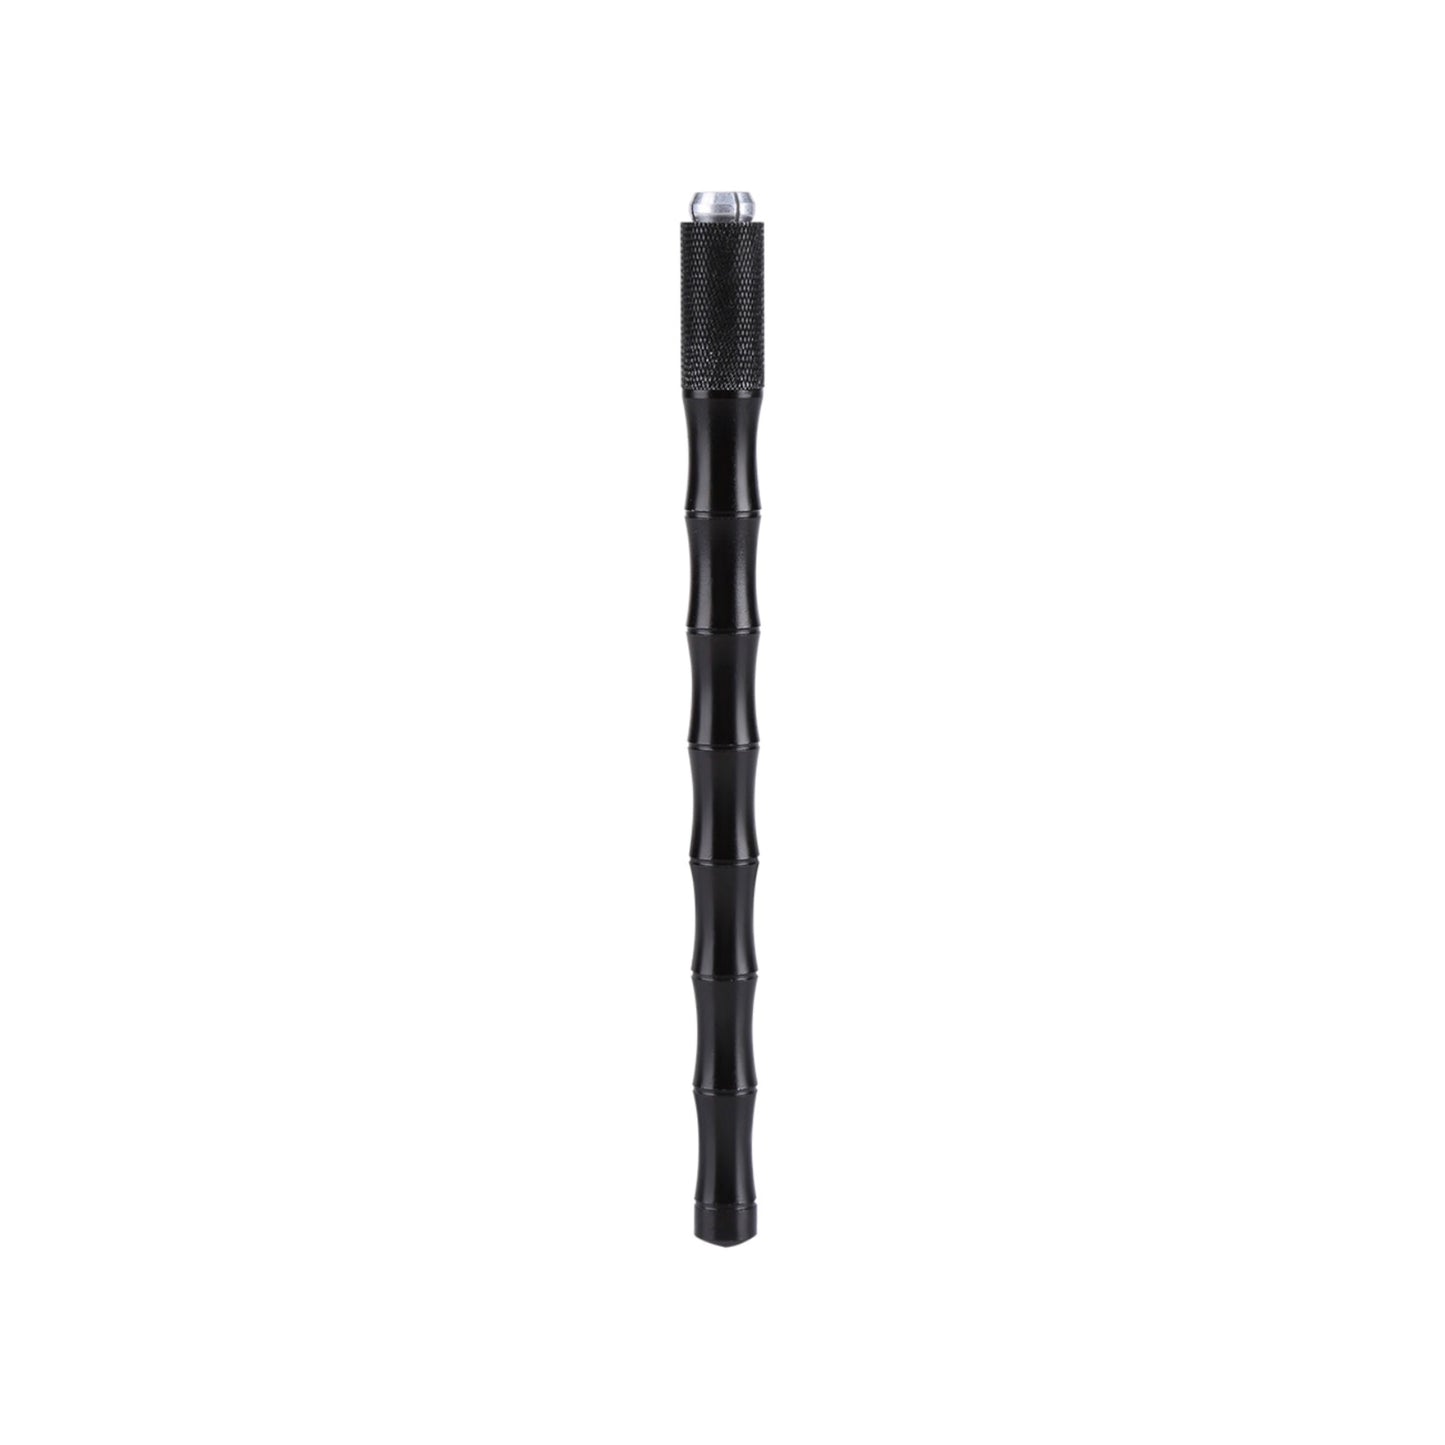 Bamboo Microblading Pen - Onyx